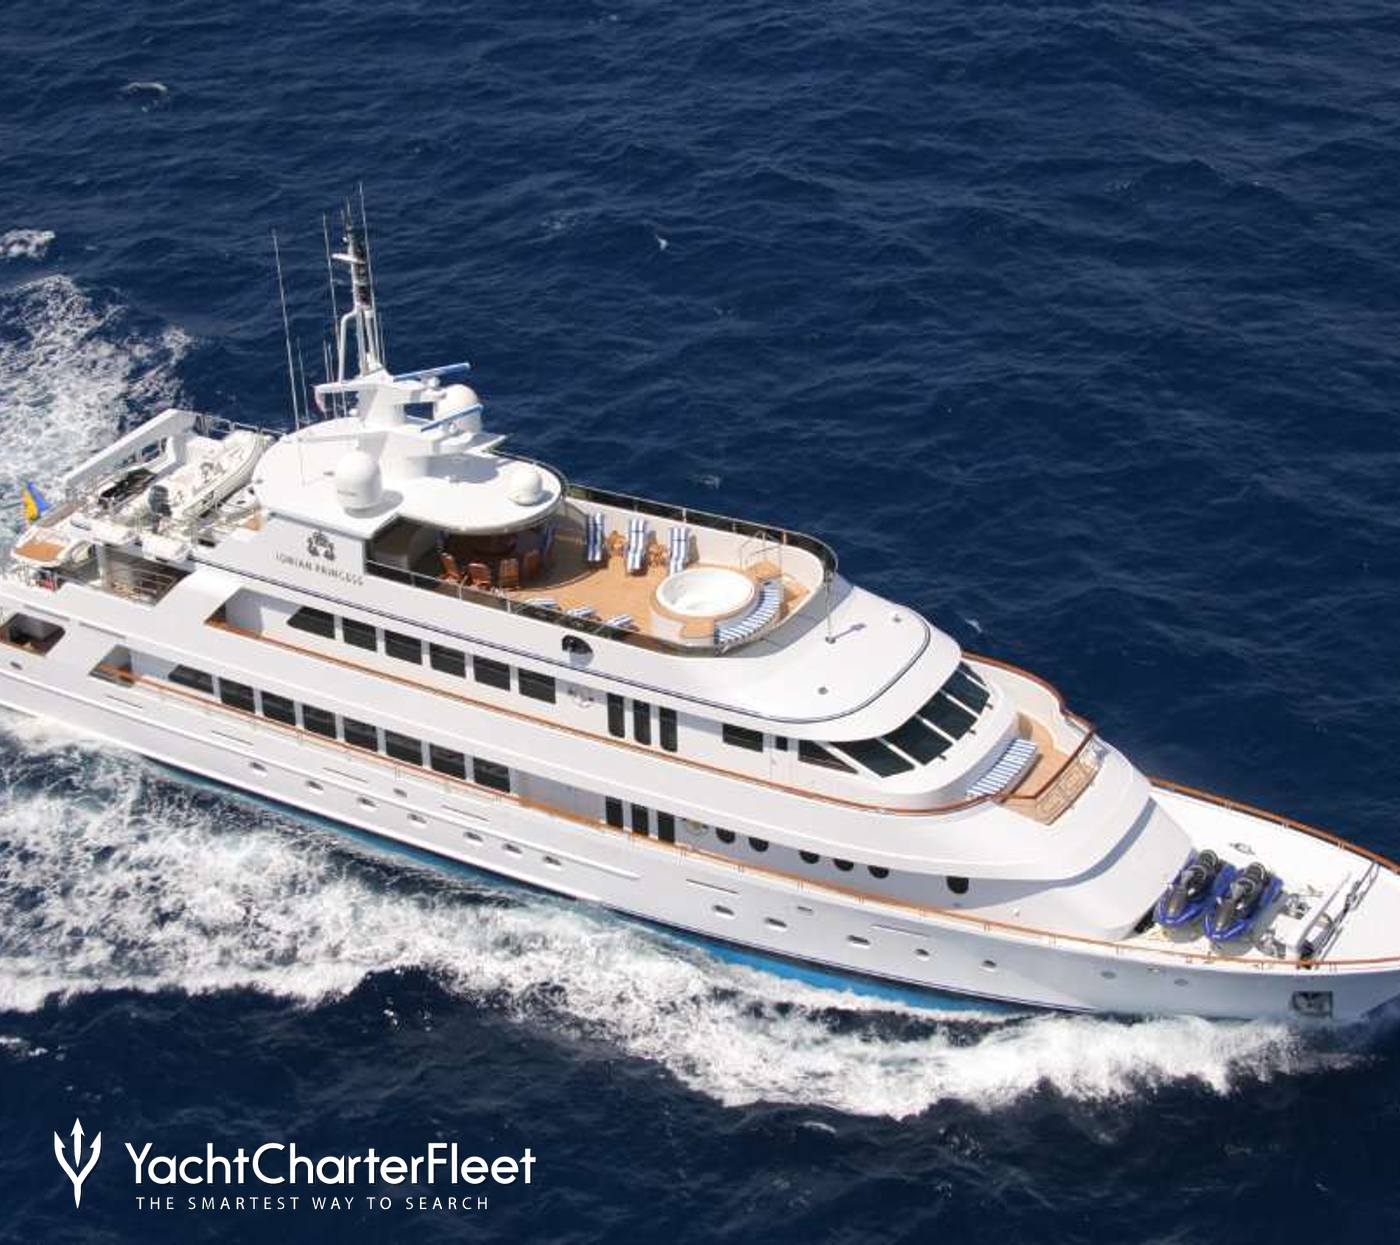 yacht size on below deck